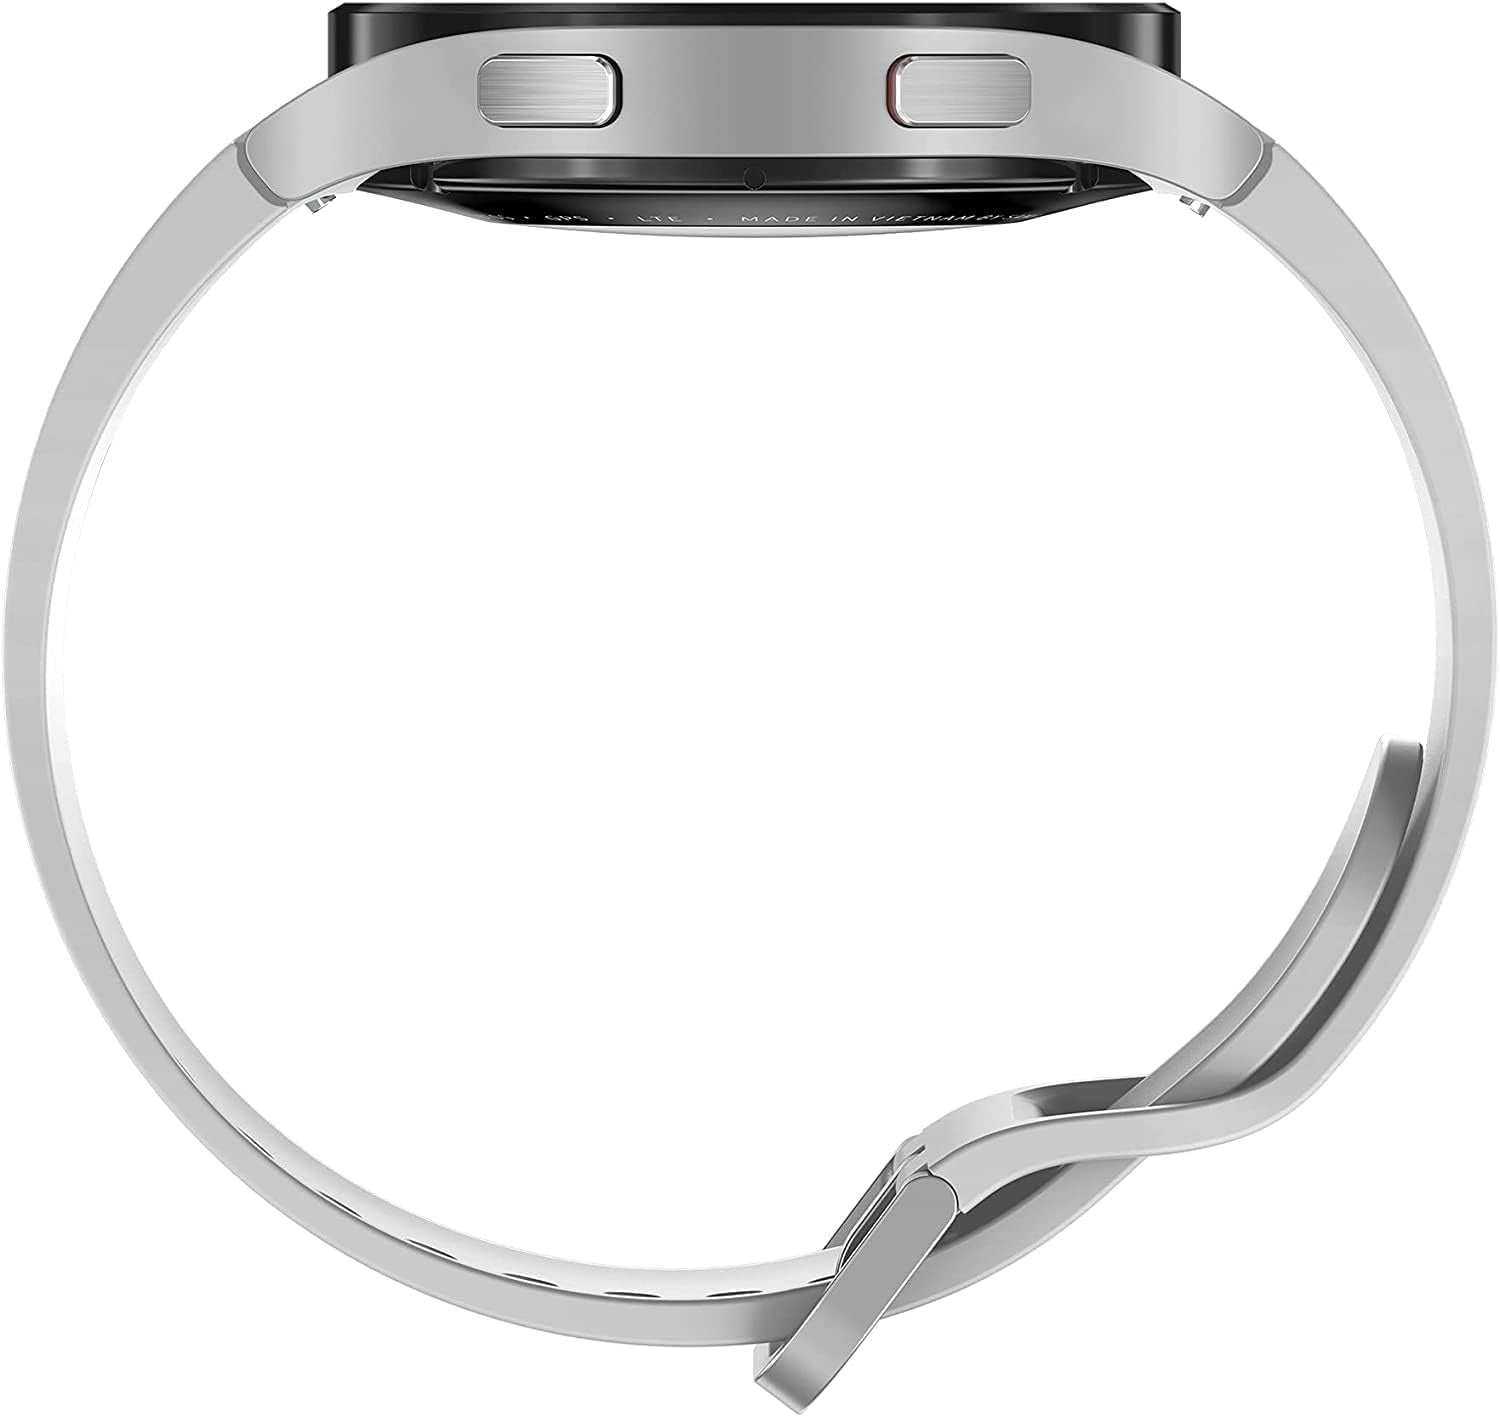 Samsung Galaxy Watch 4 Smartwatch (44mm, WIFI + LTE, Bluetooth) - Silver (Certified Refurbished)